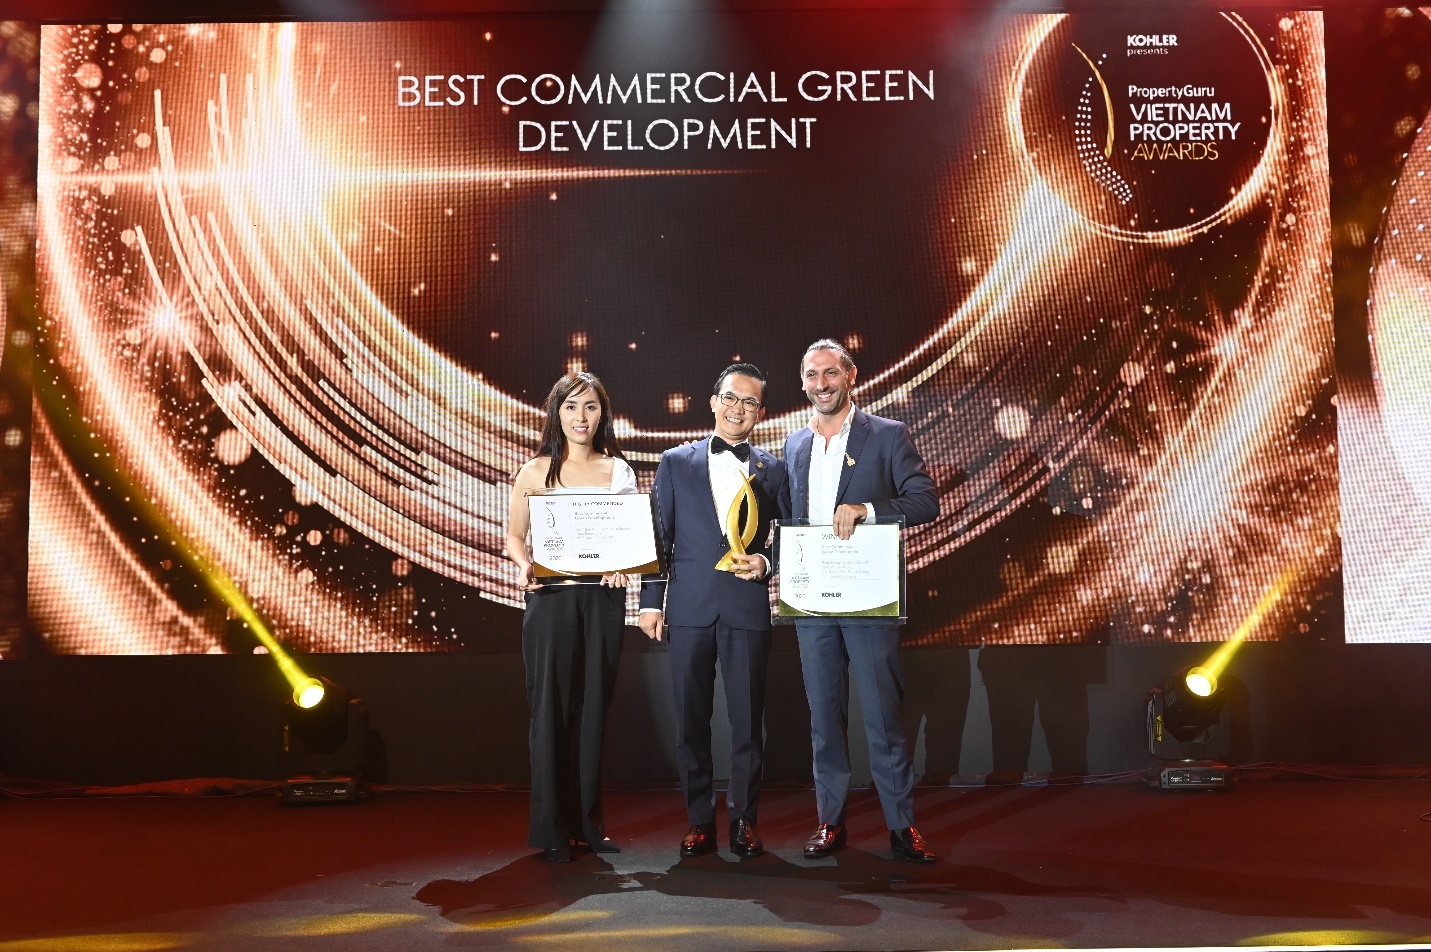 vsip jsc bags best sustainable developer title at vietnam property awards 2020